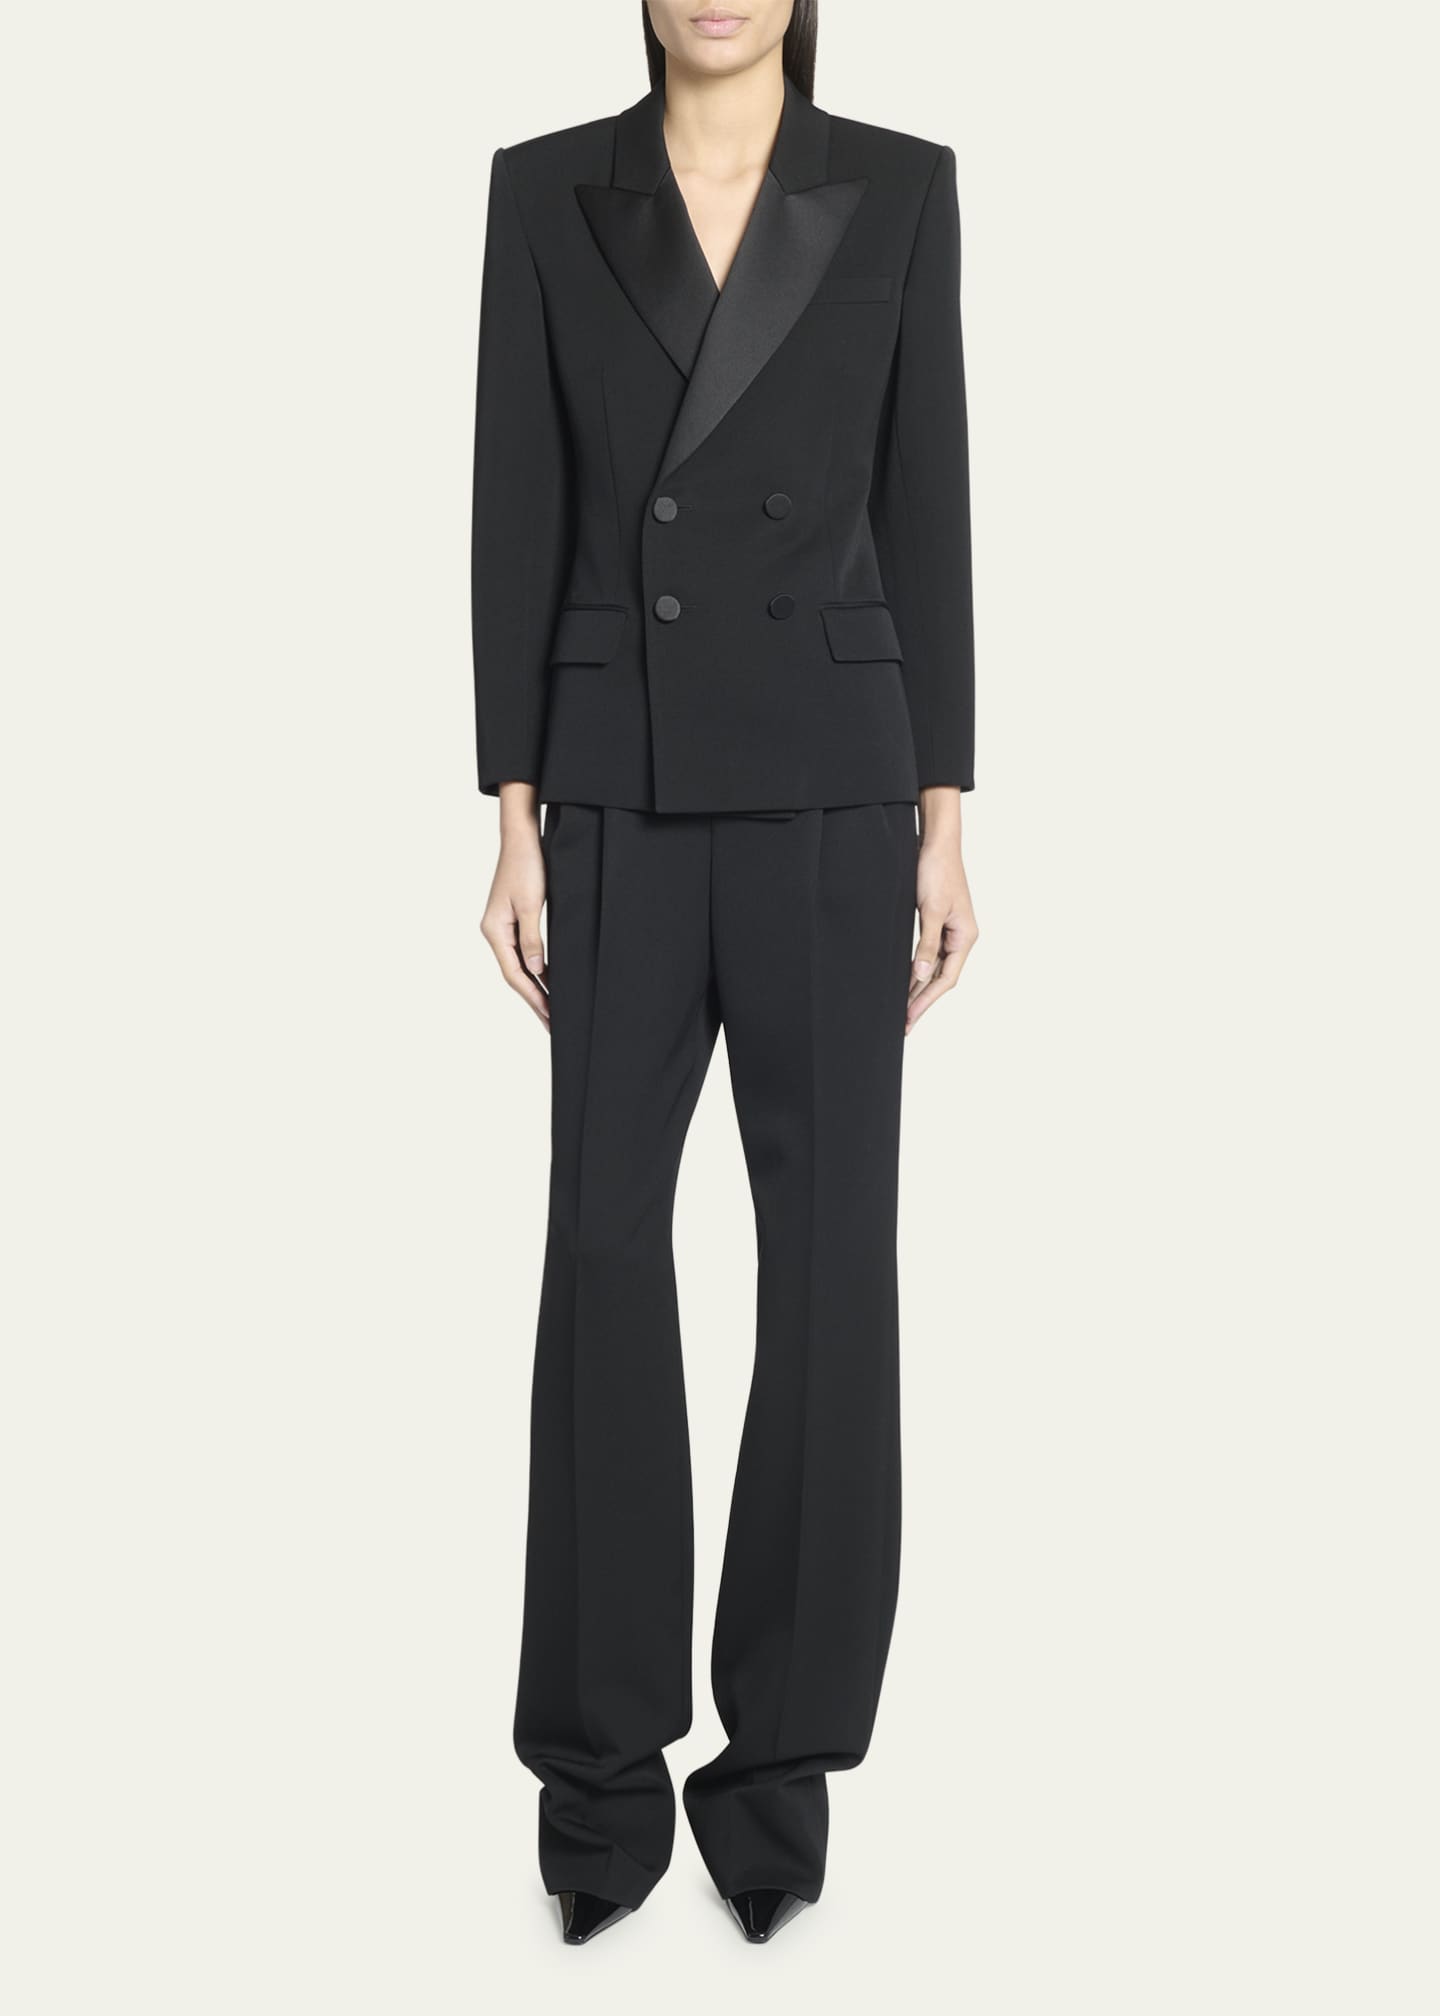 Saint Laurent Fitted Tuxedo Blazer Jacket - Bergdorf Goodman